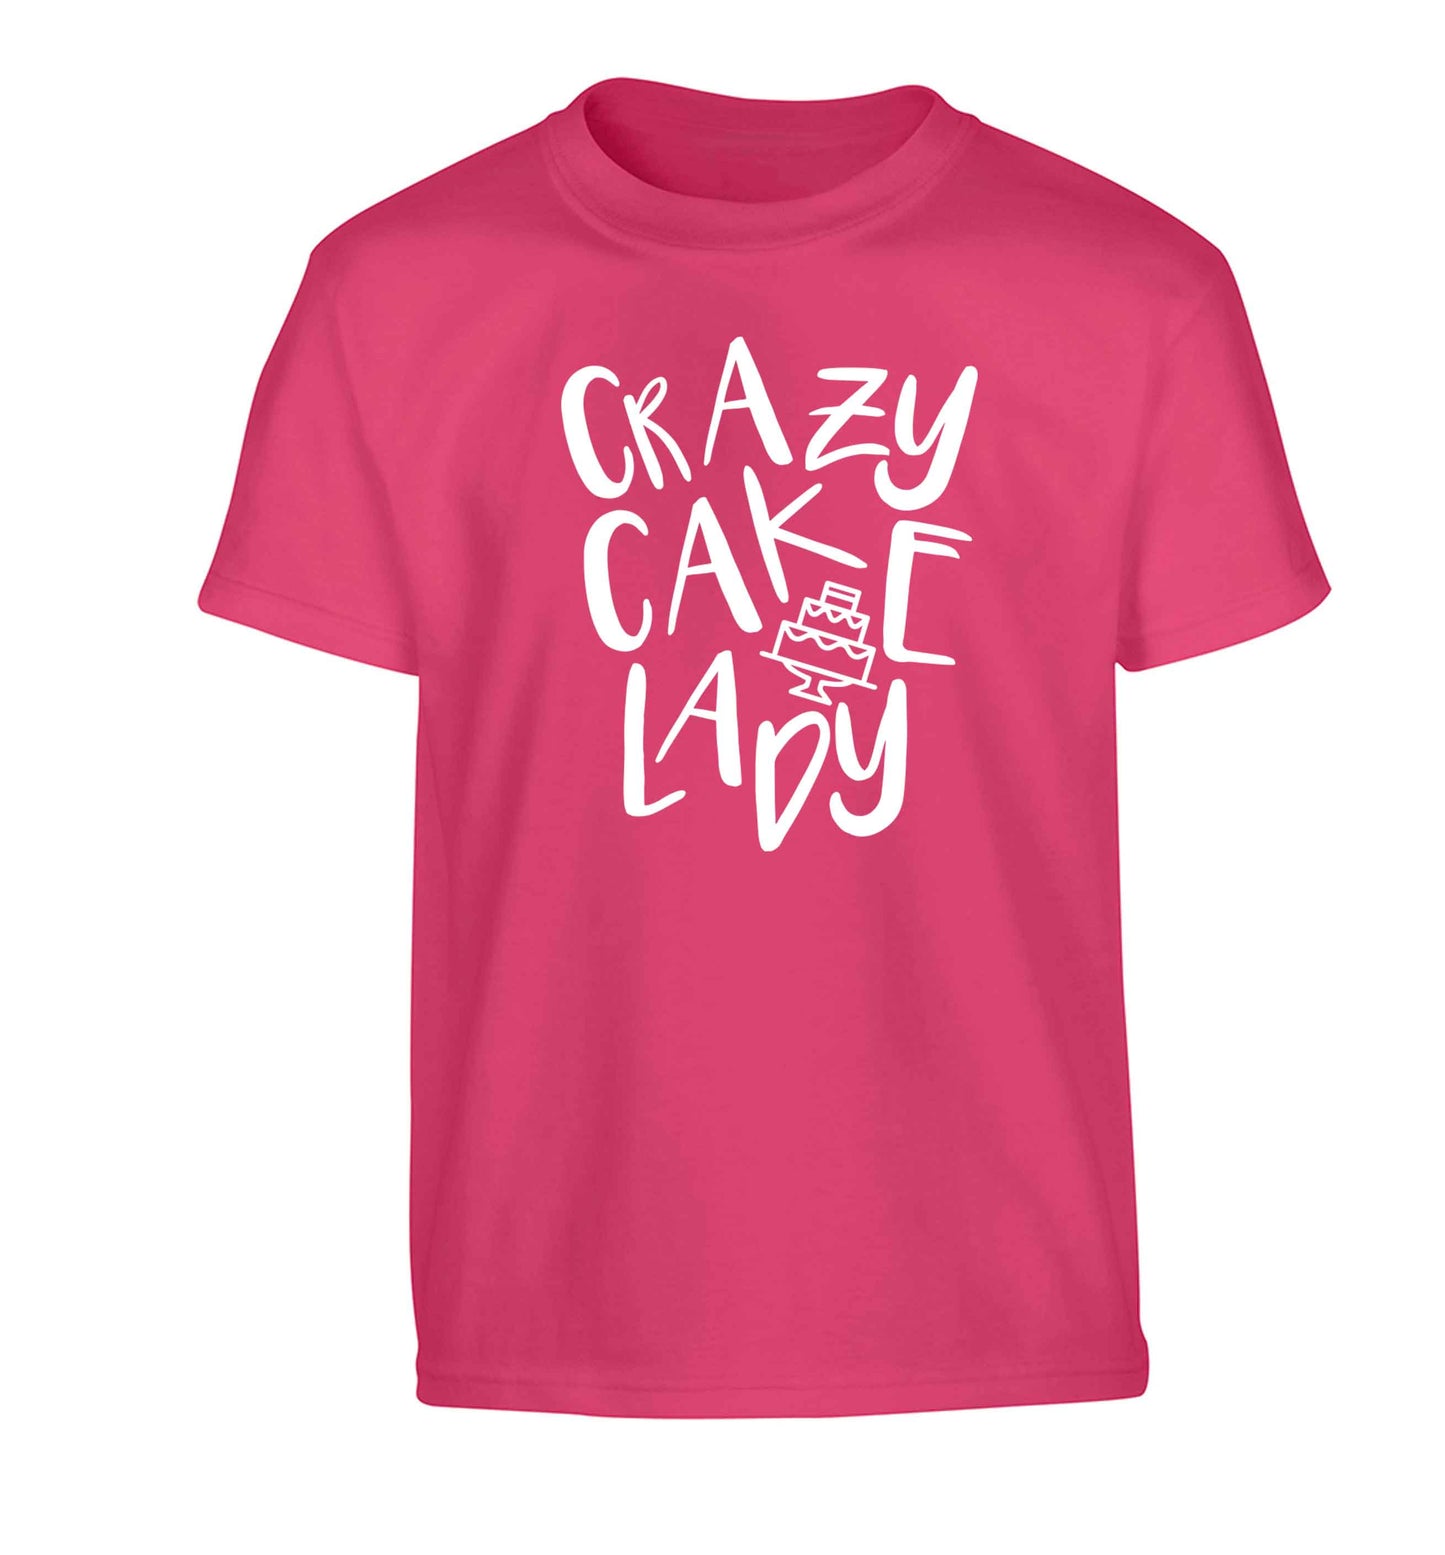 Crazy cake lady Children's pink Tshirt 12-13 Years